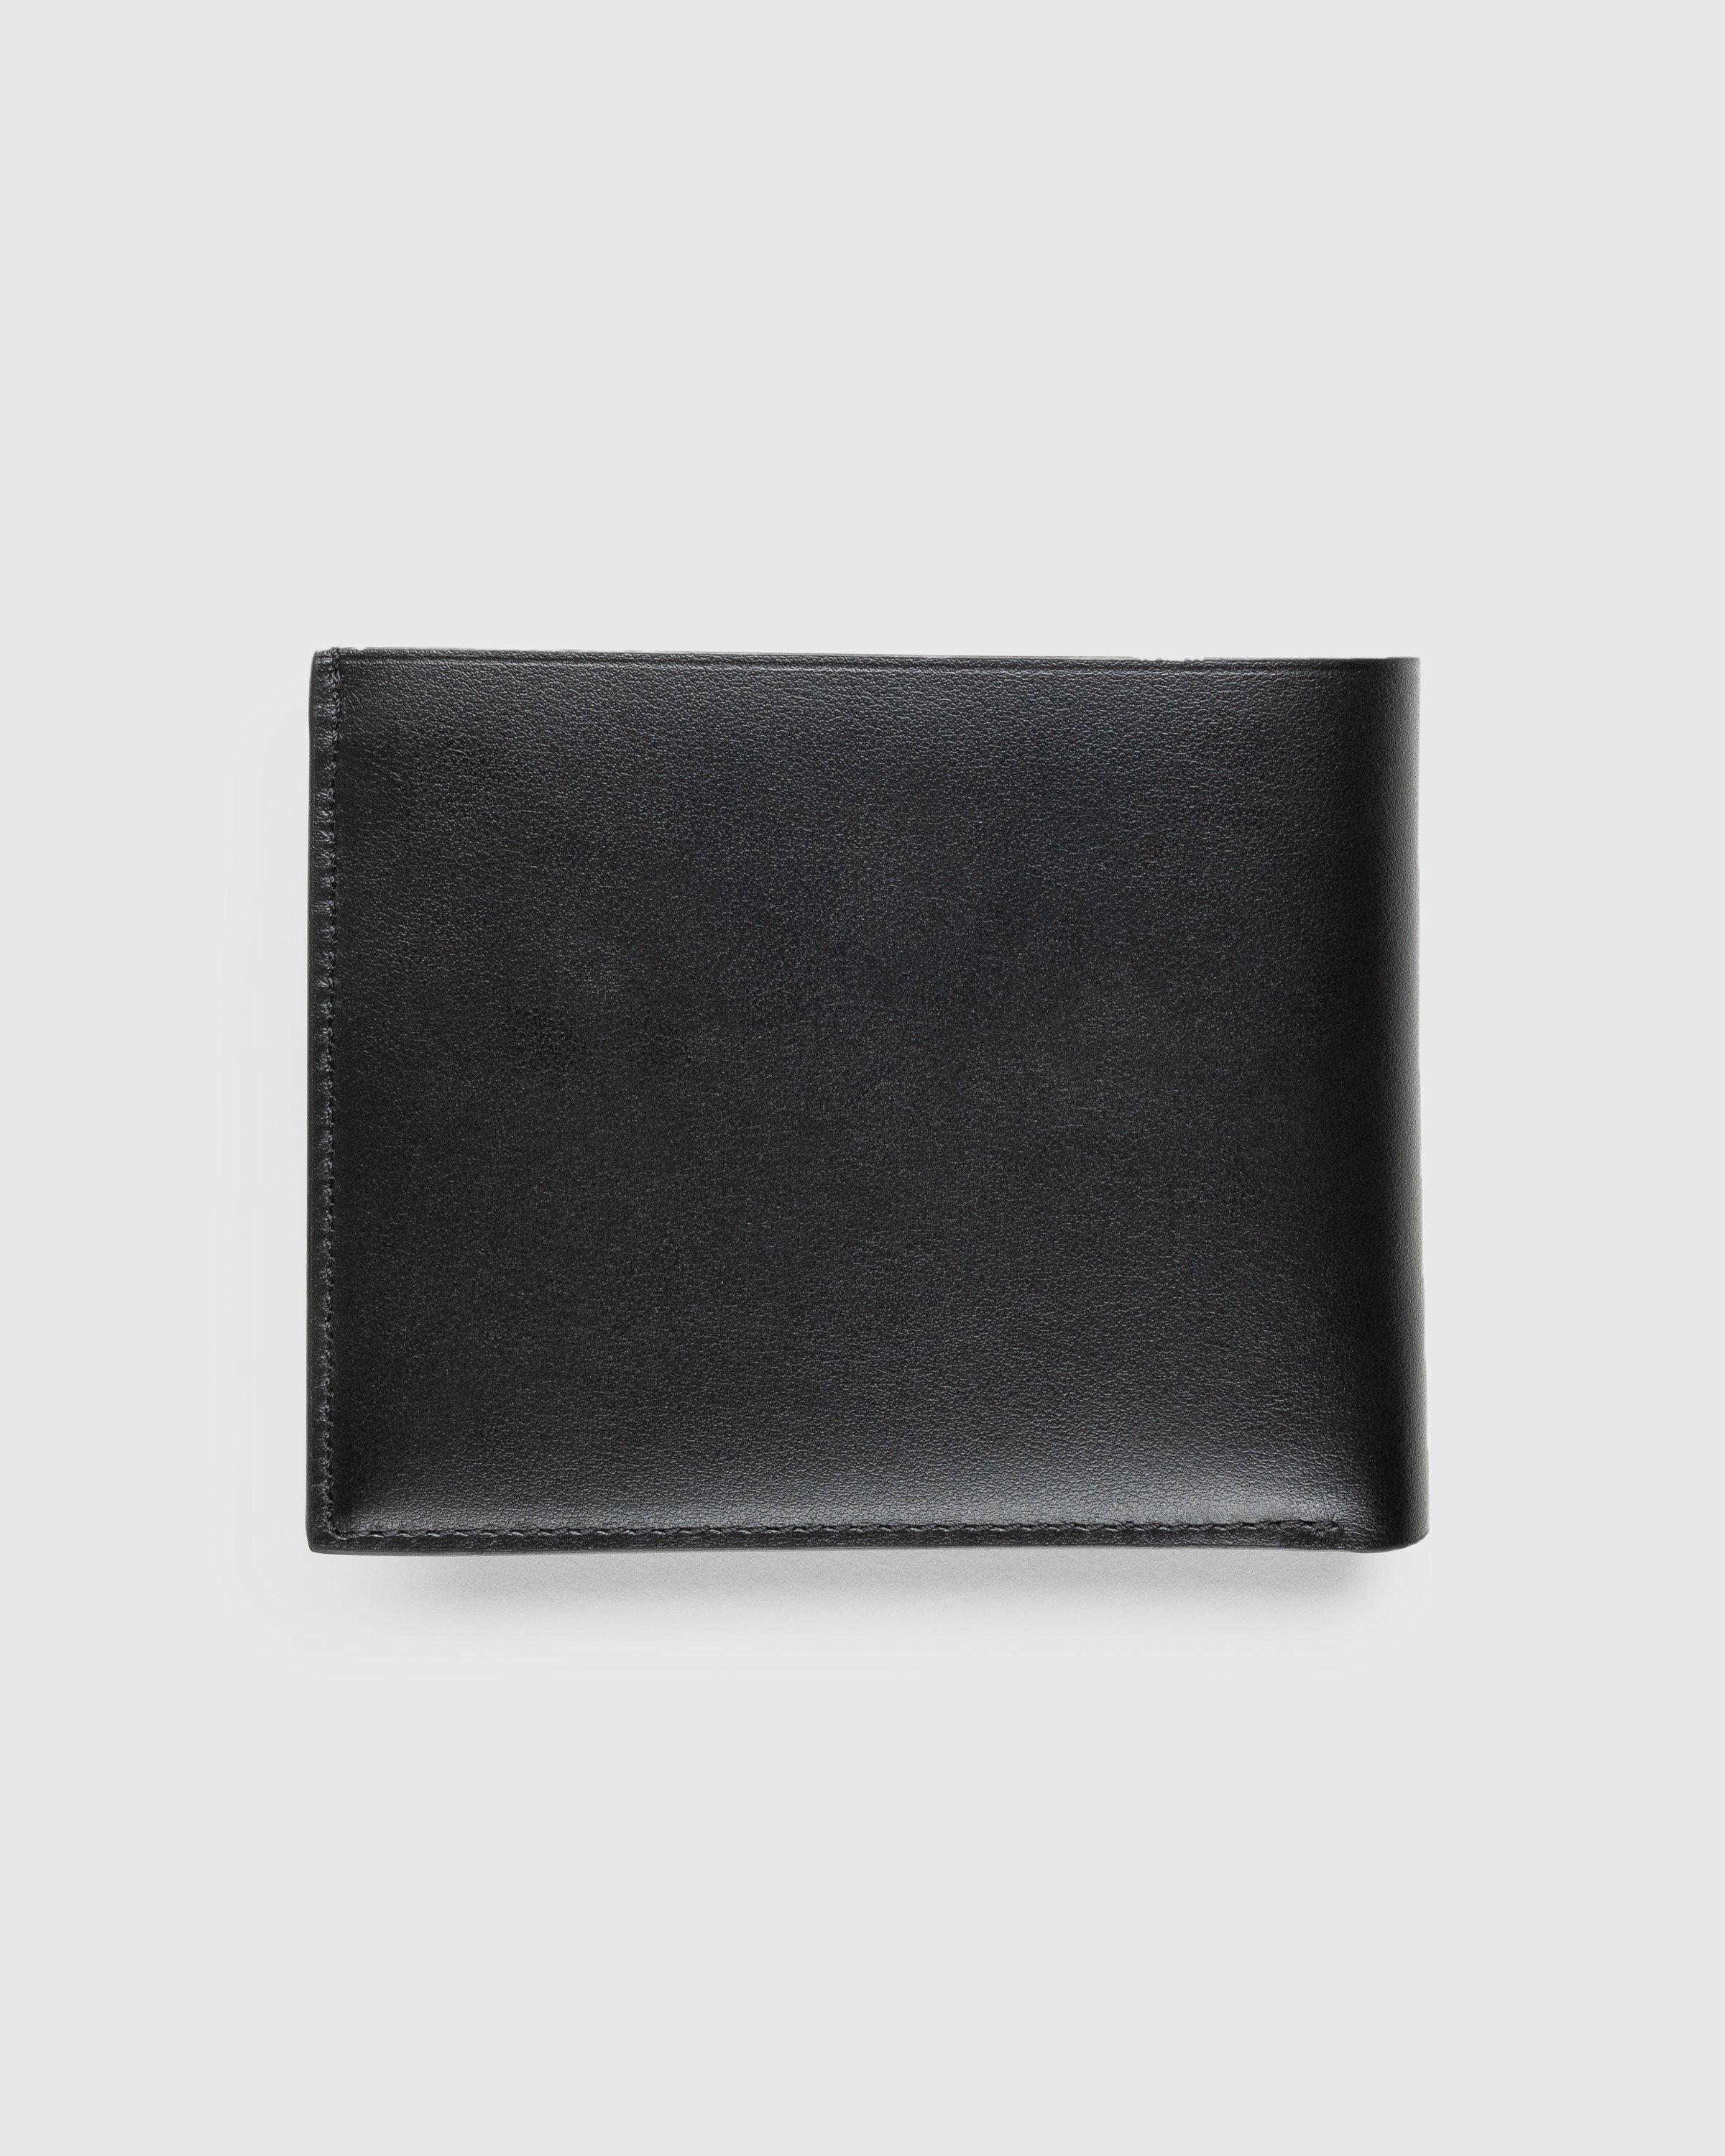 Jil Sander - Zip Pocket Wallet Black - Accessories - Black - Image 2